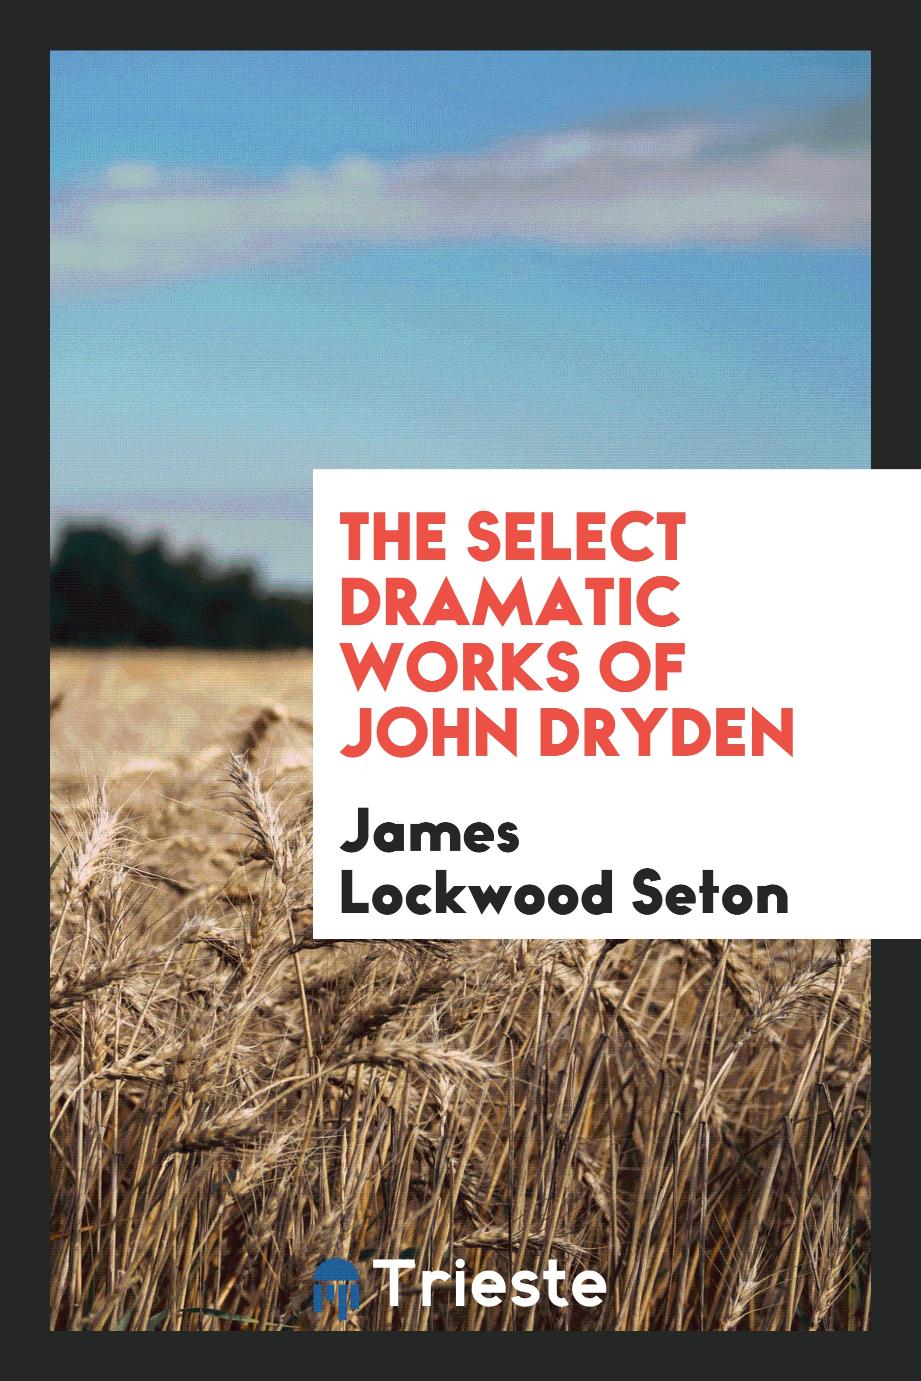 James Lockwood Seton - The select dramatic works of John Dryden